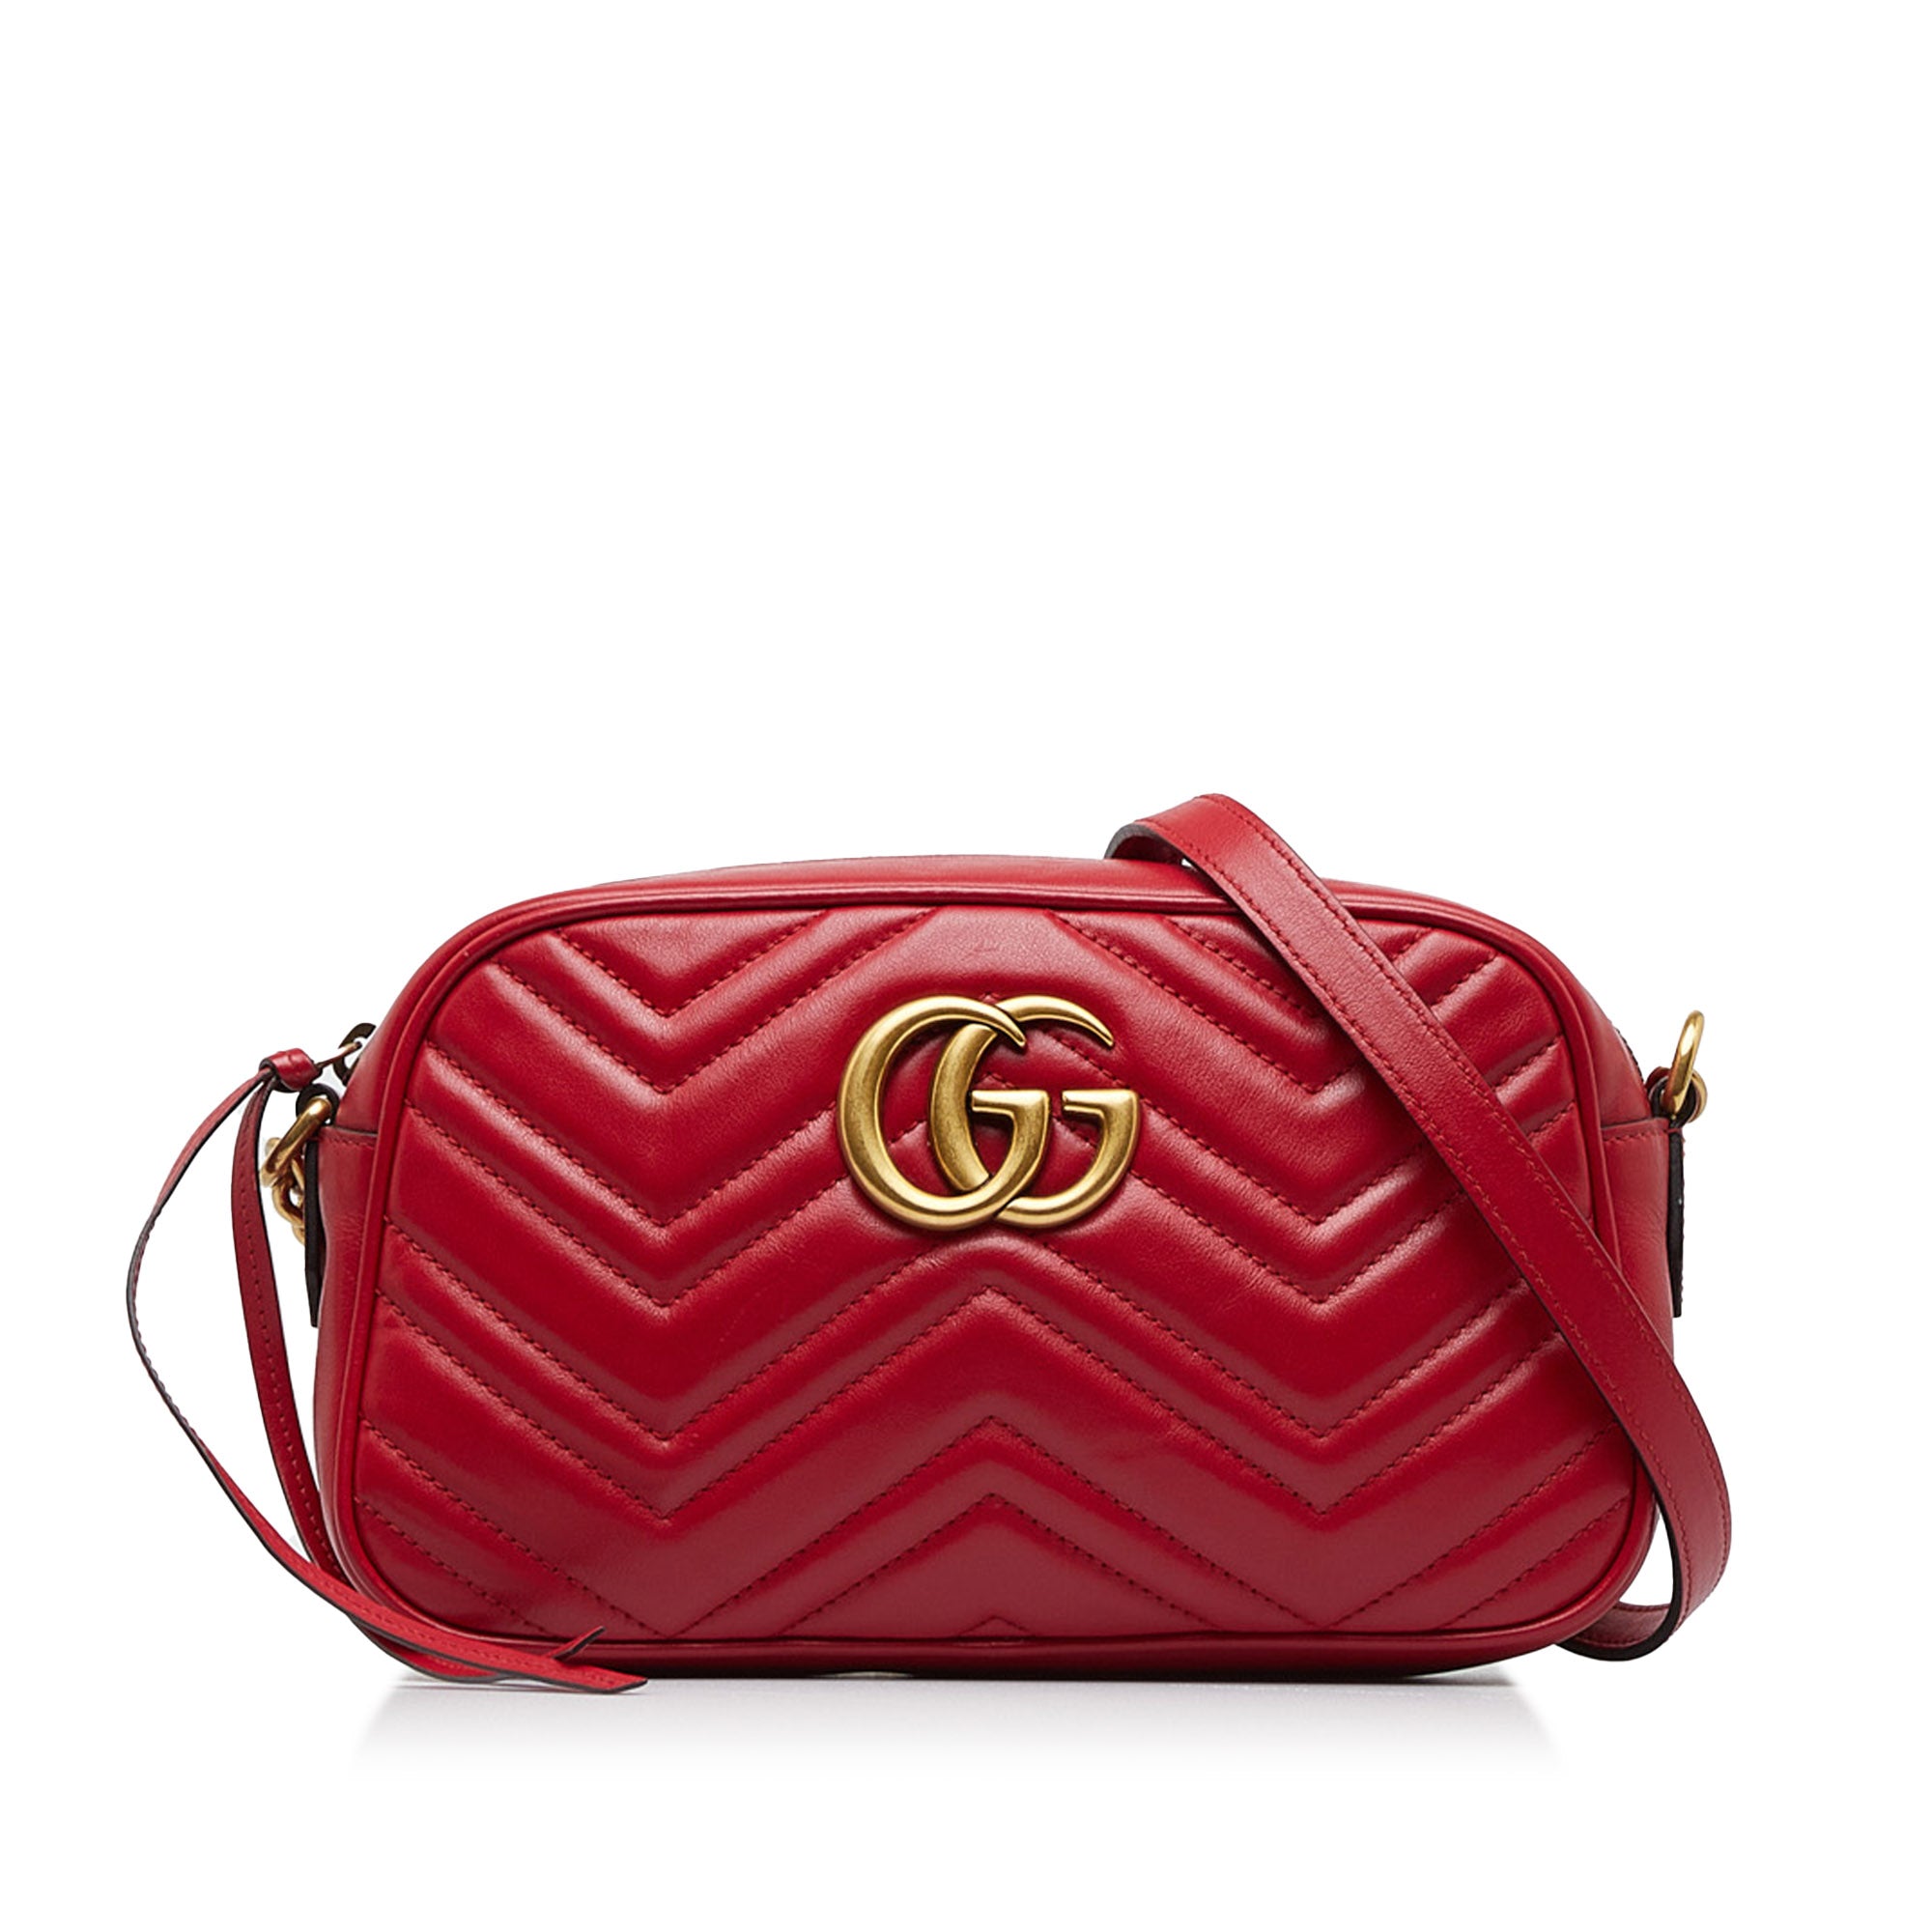 Gucci GG Small Marmont Matelasse Camera Bag